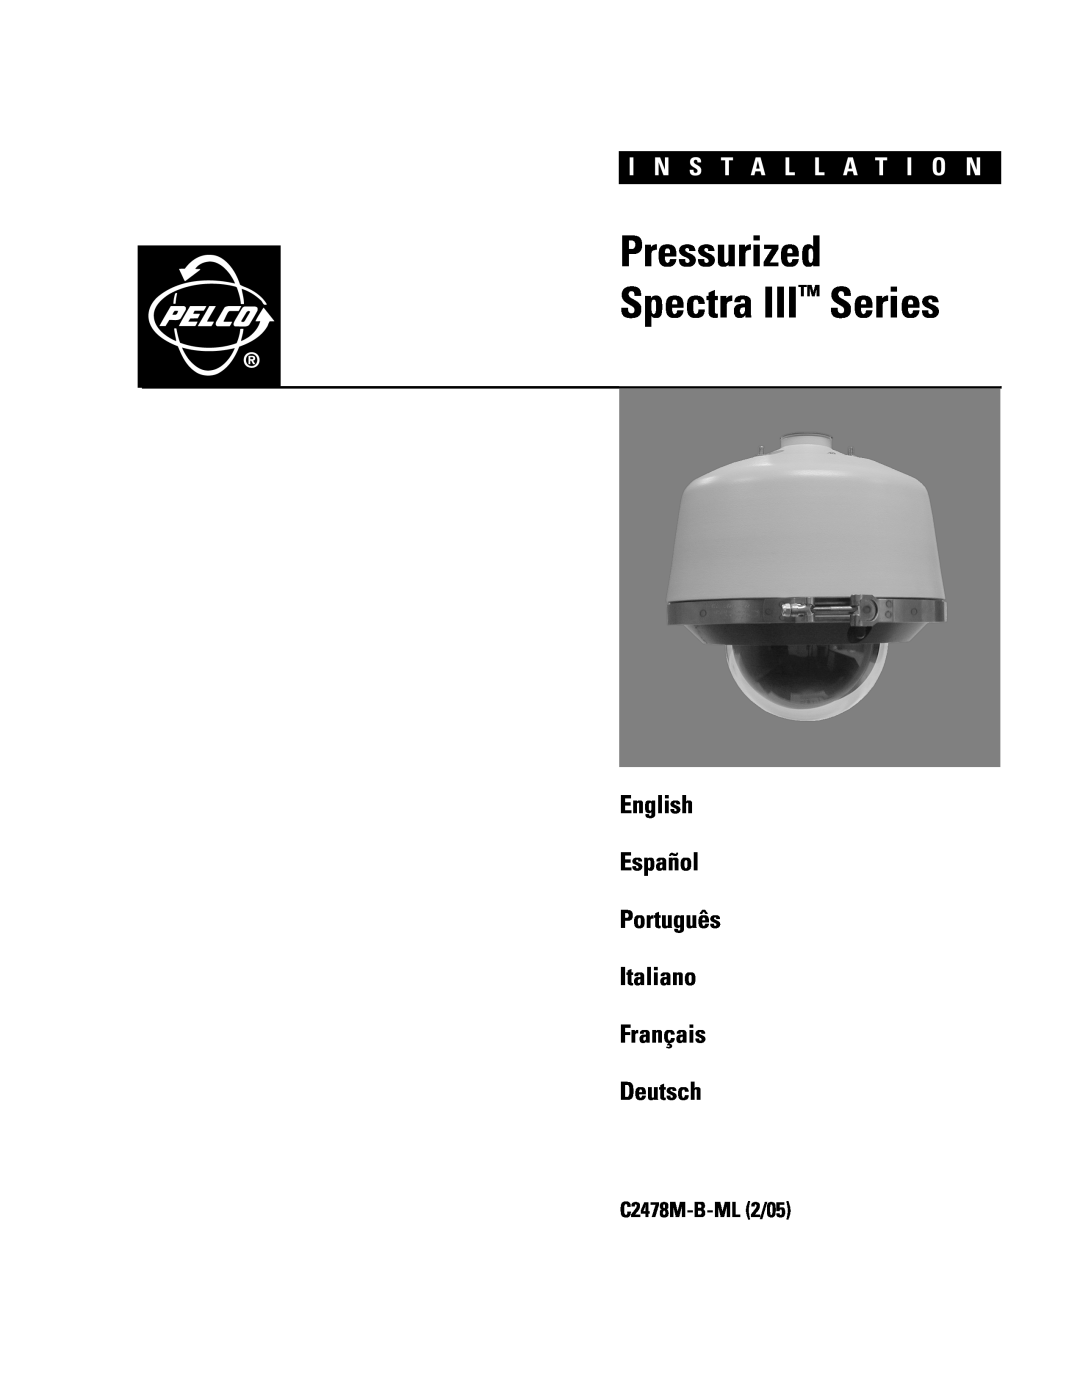 Pelco manual Pressurized Spectra III Series, I N S T A L L A T I O N, Deutsch, C2478M-B-ML2/05 